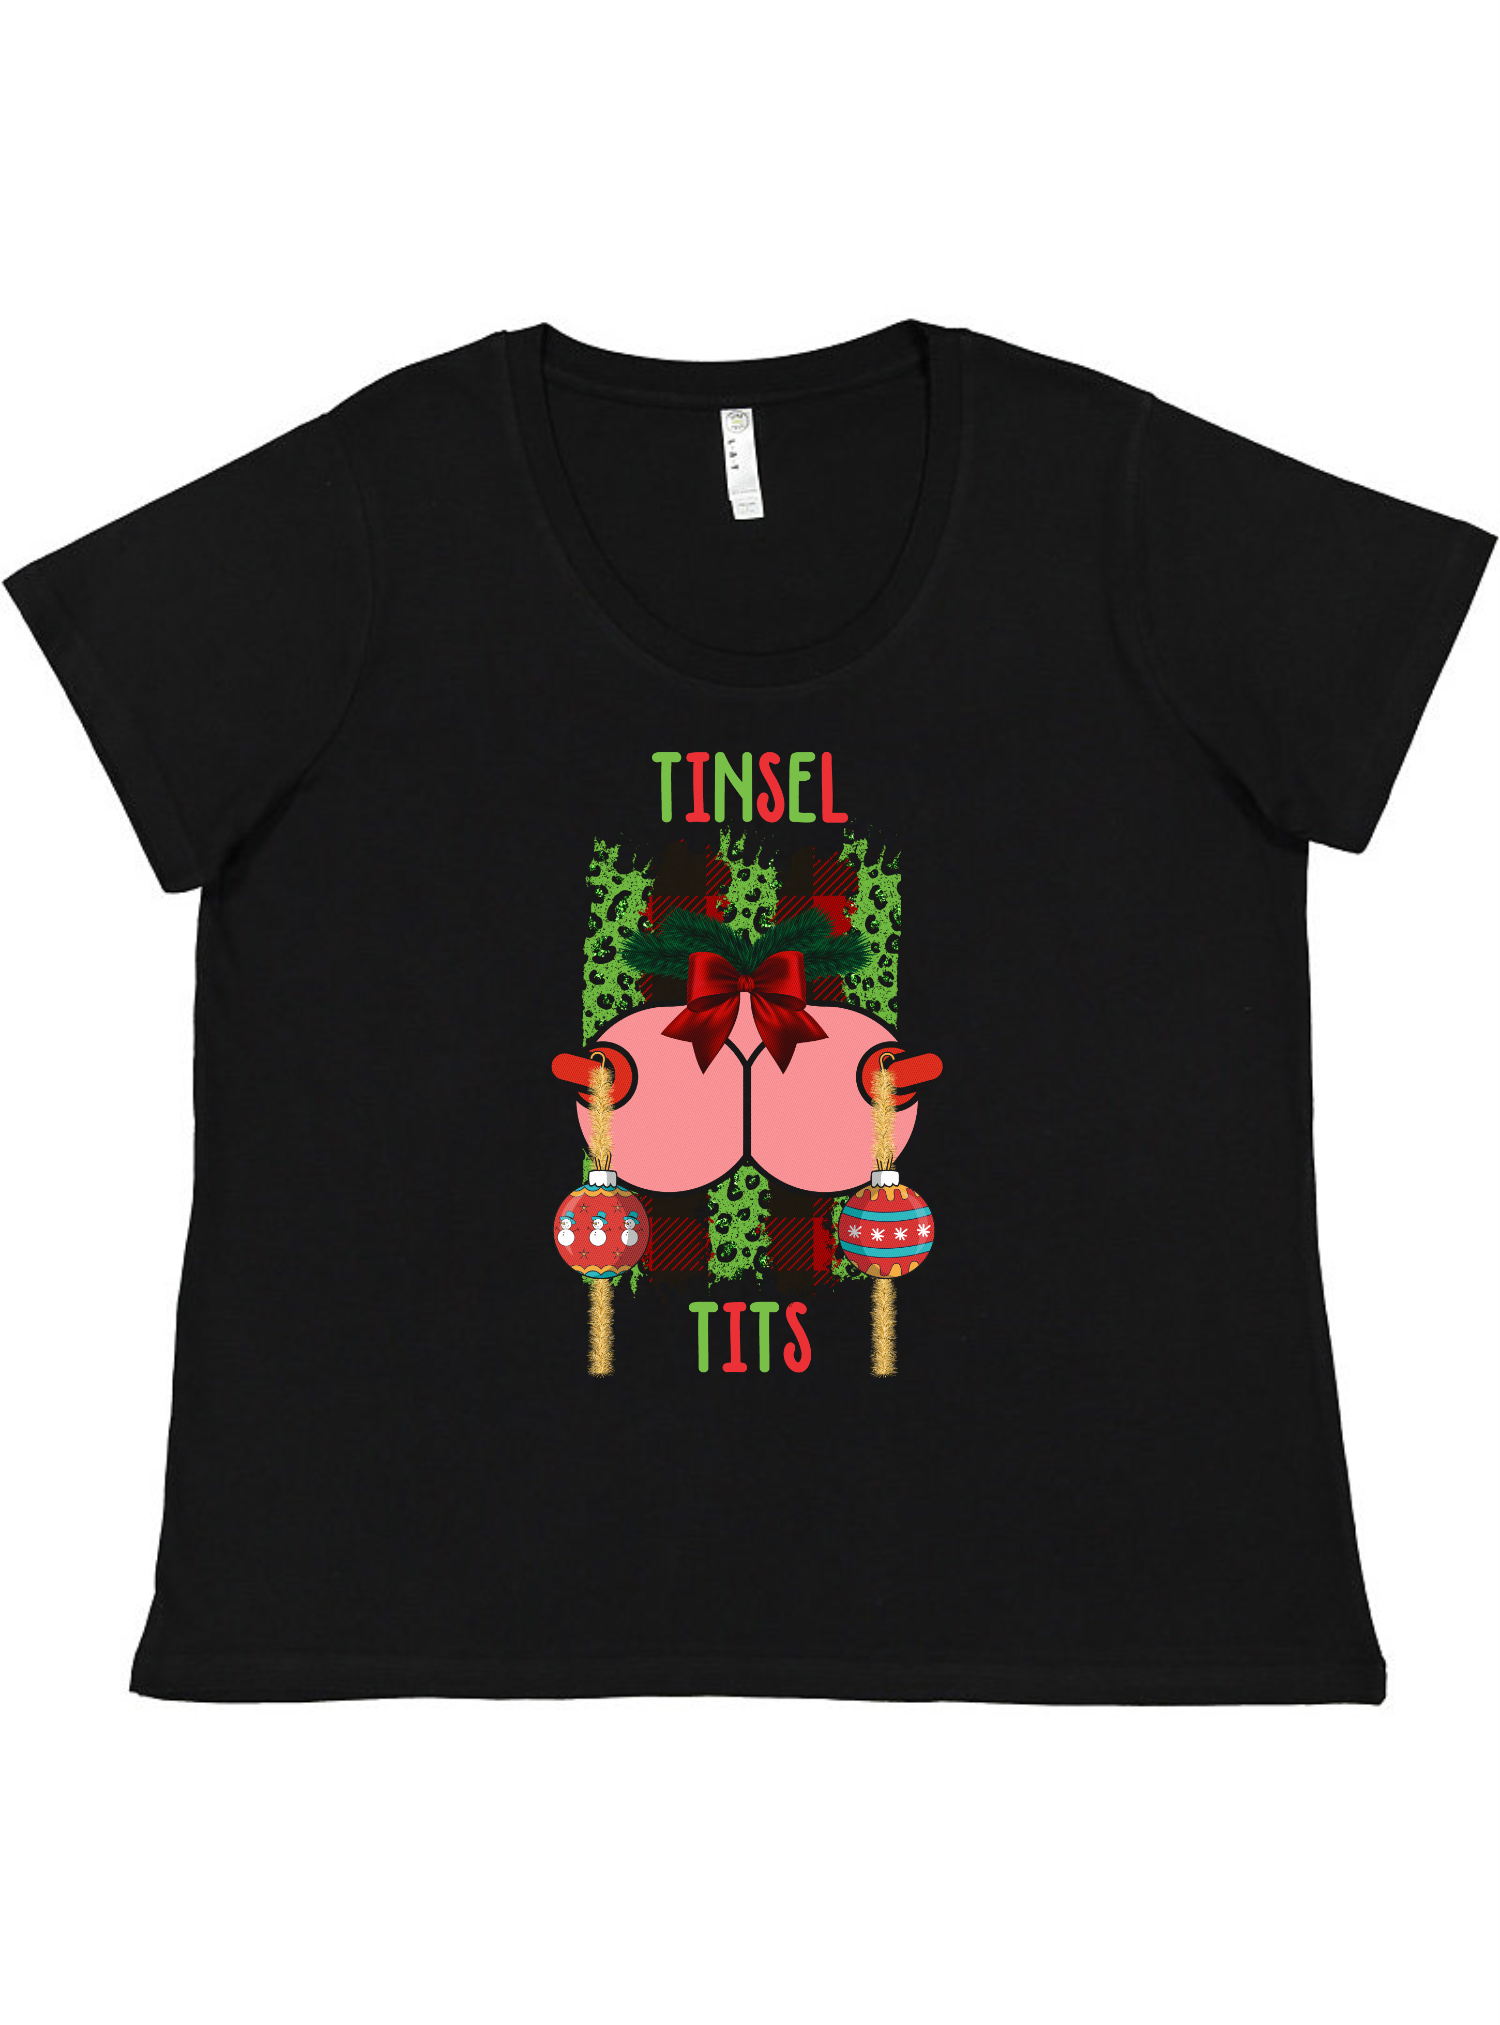 Tinsel Tits Ladies Tee Ladies Shirt by Akron Pride Custom Tees | Akron Pride Custom Tees